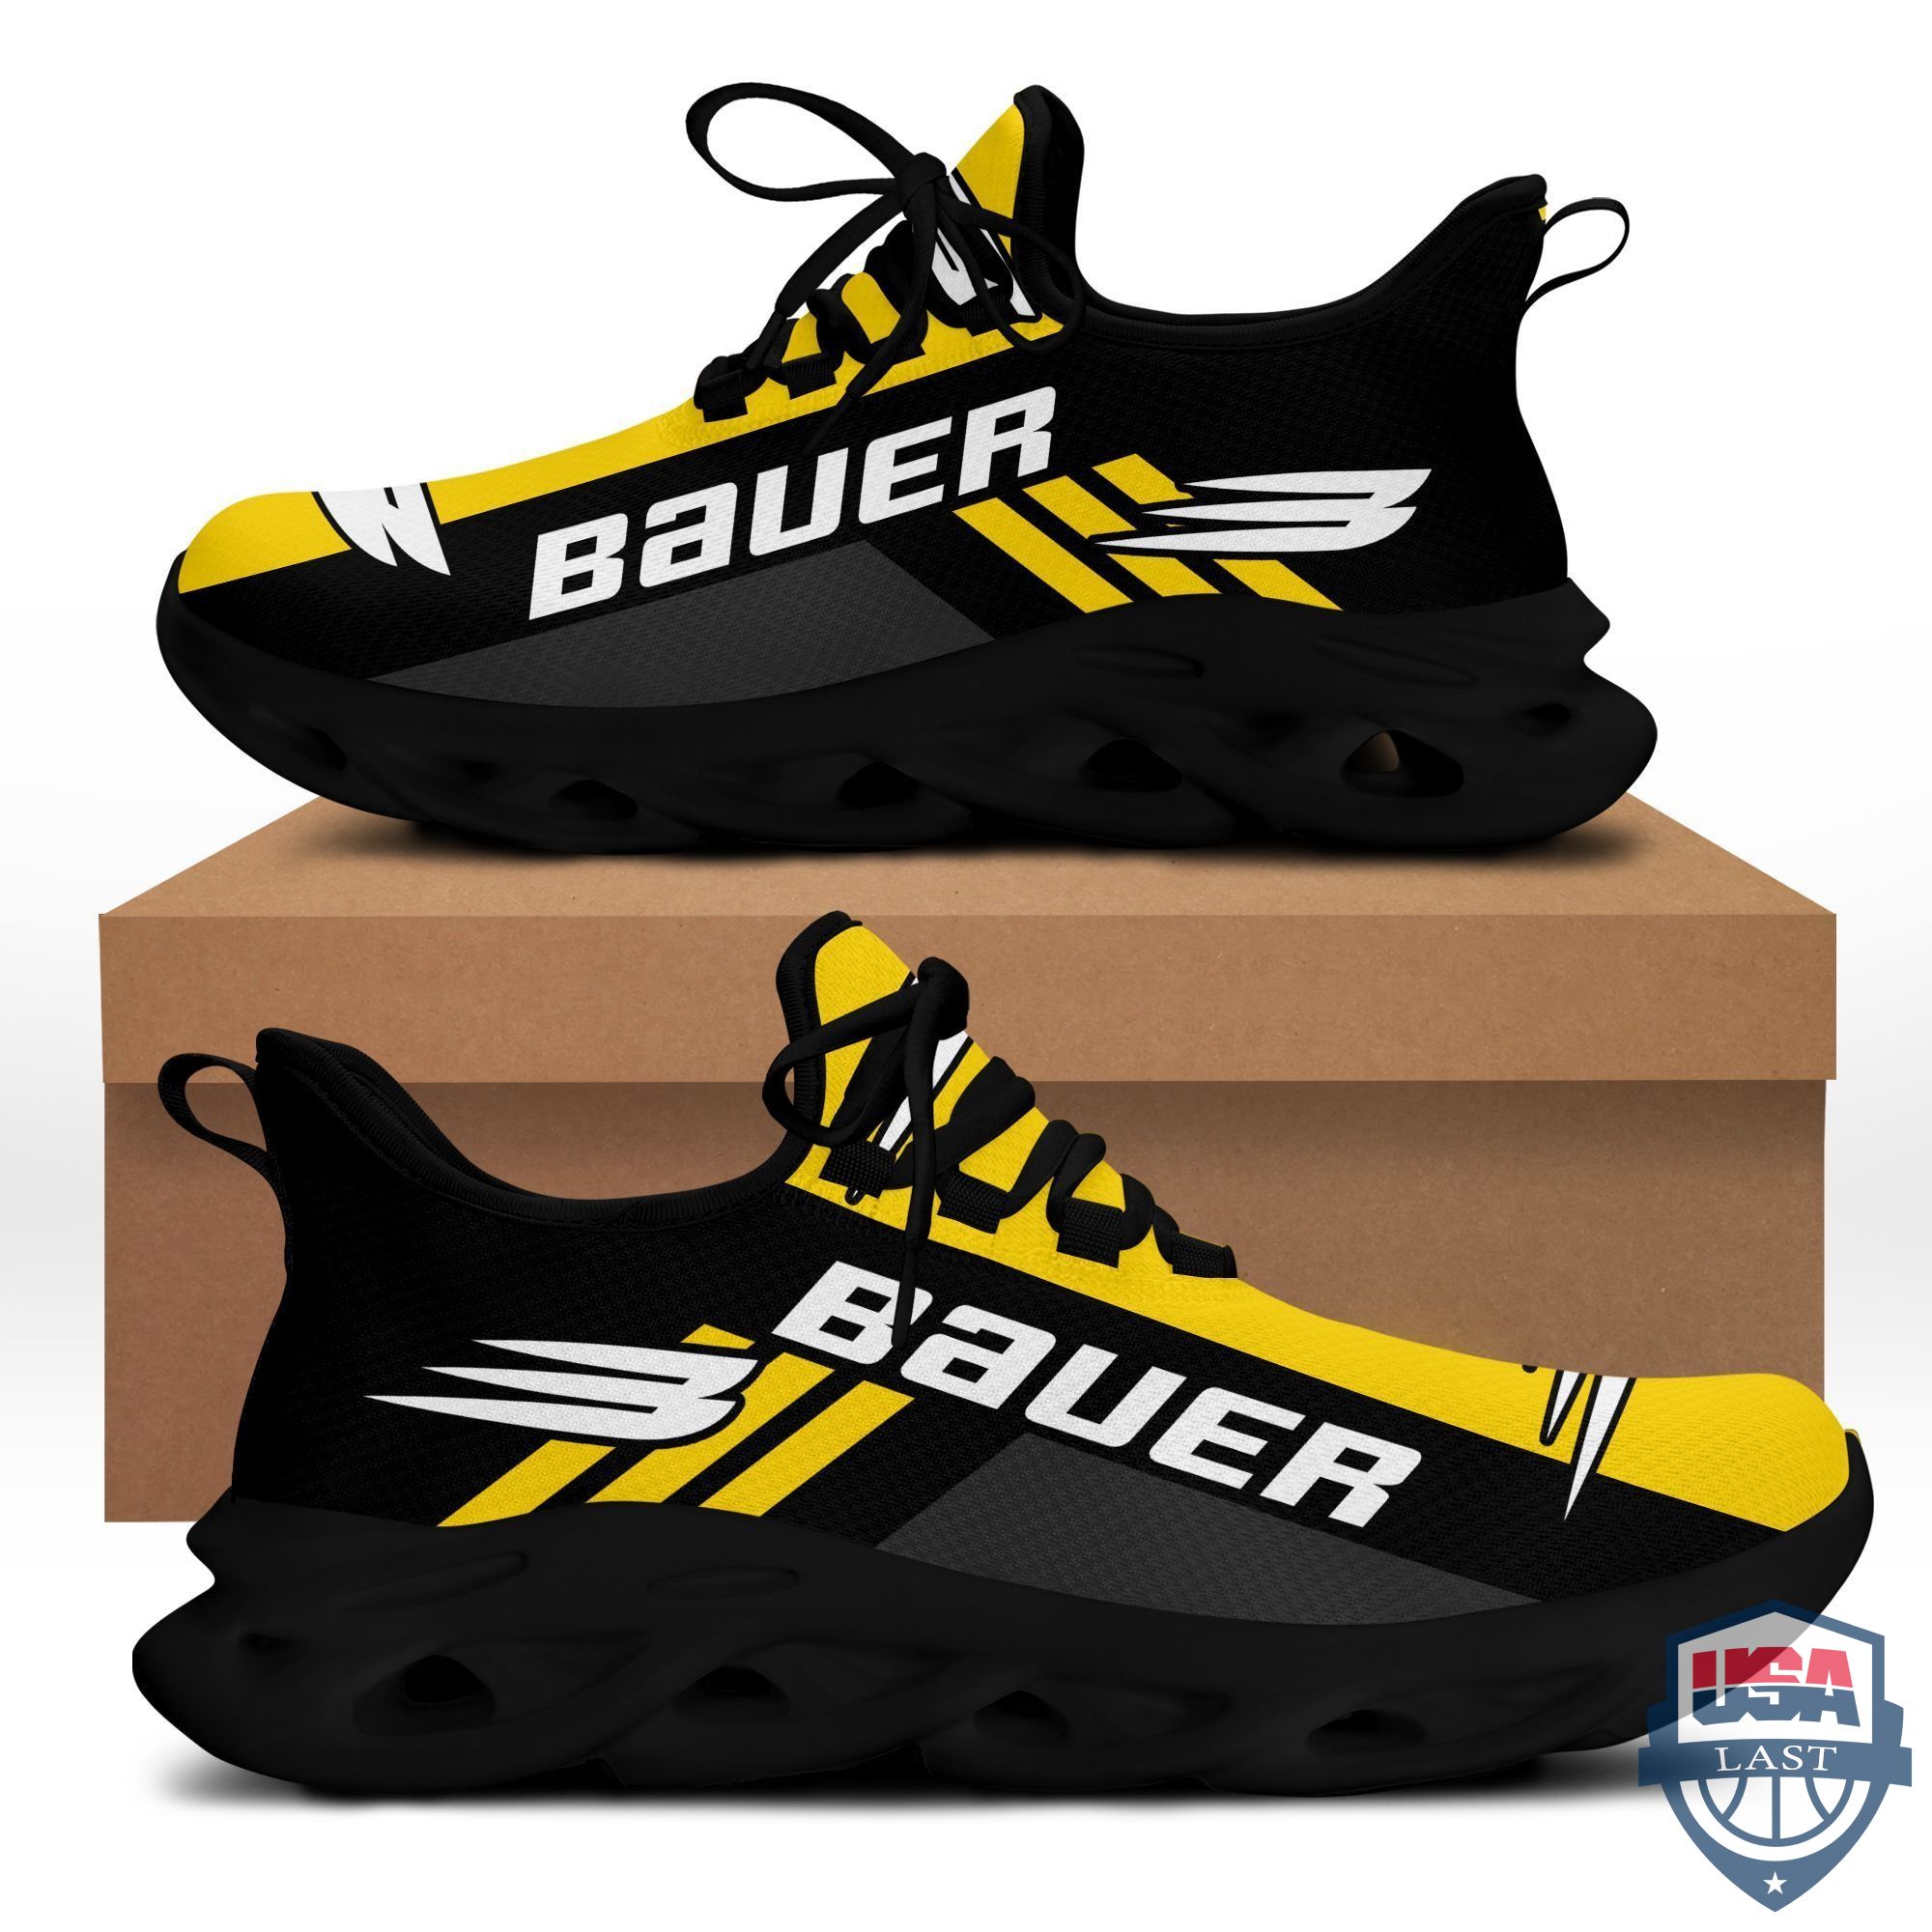 Bauer Max Soul Shoes Yellow Version For Men, Women